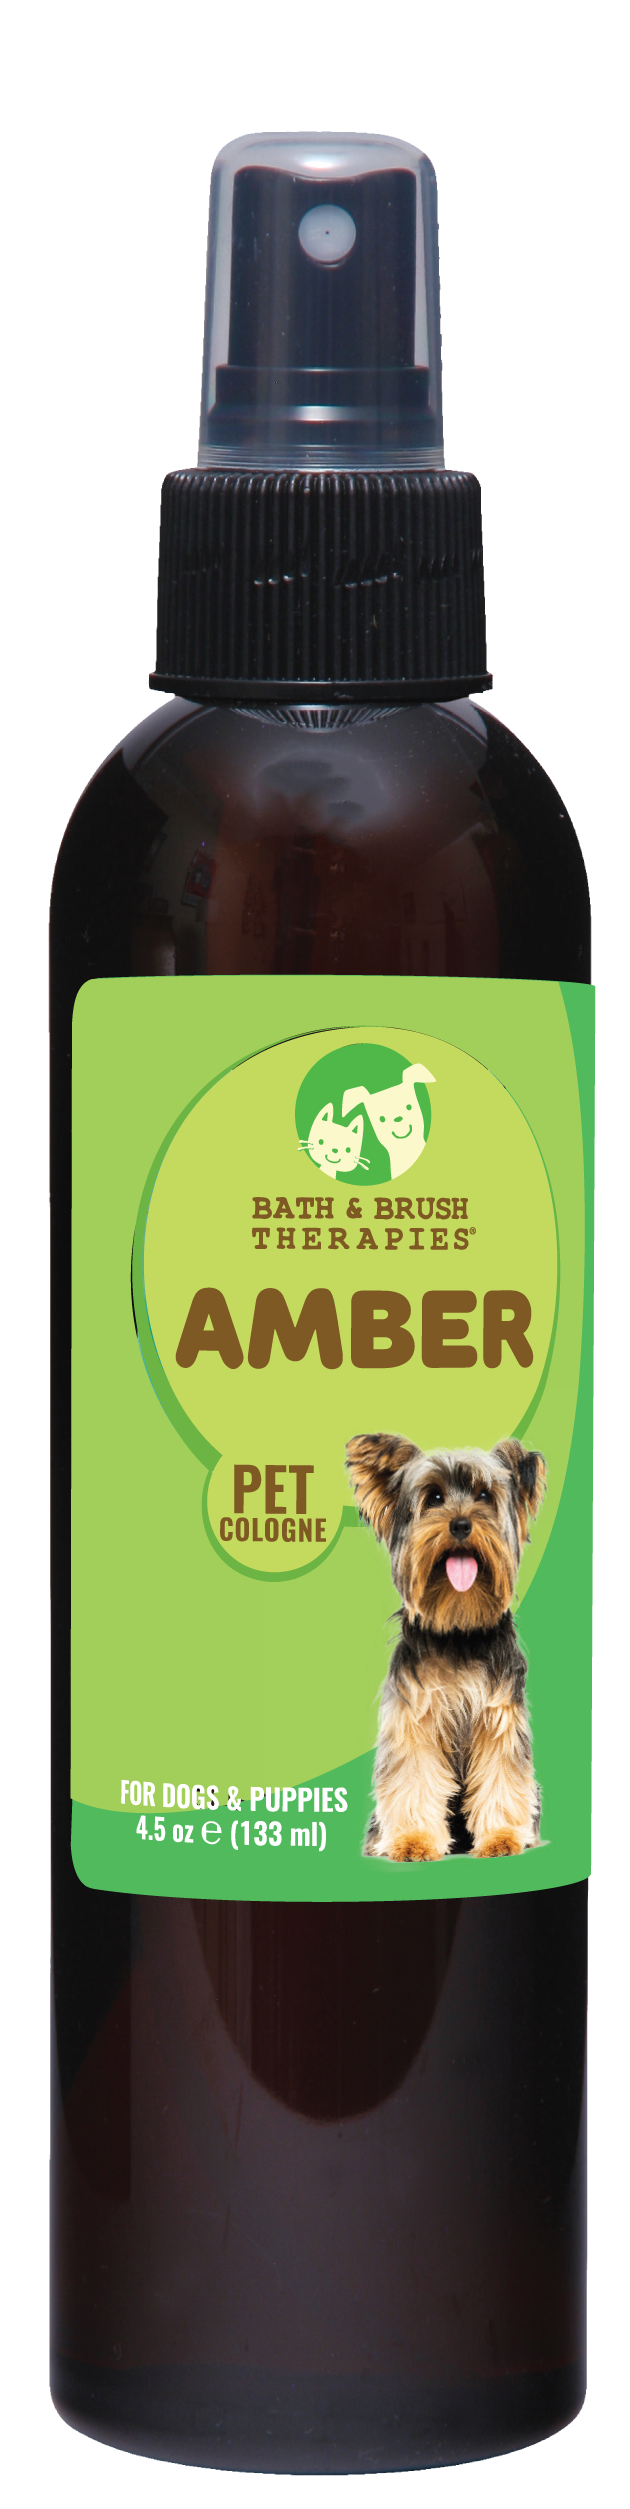 Amber Pet Cologne